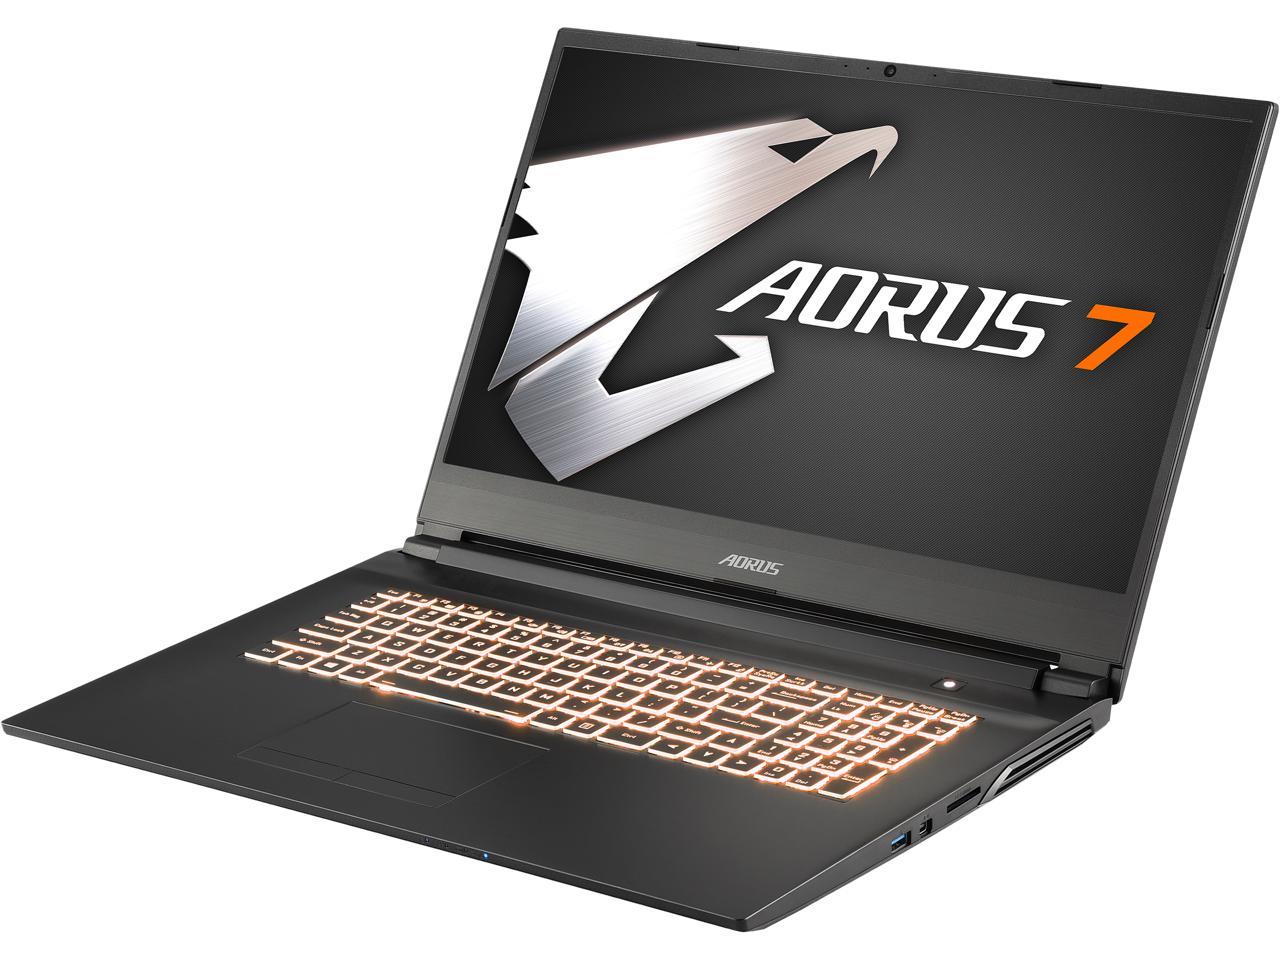 Gigabyte Aorus vB gaming laptops